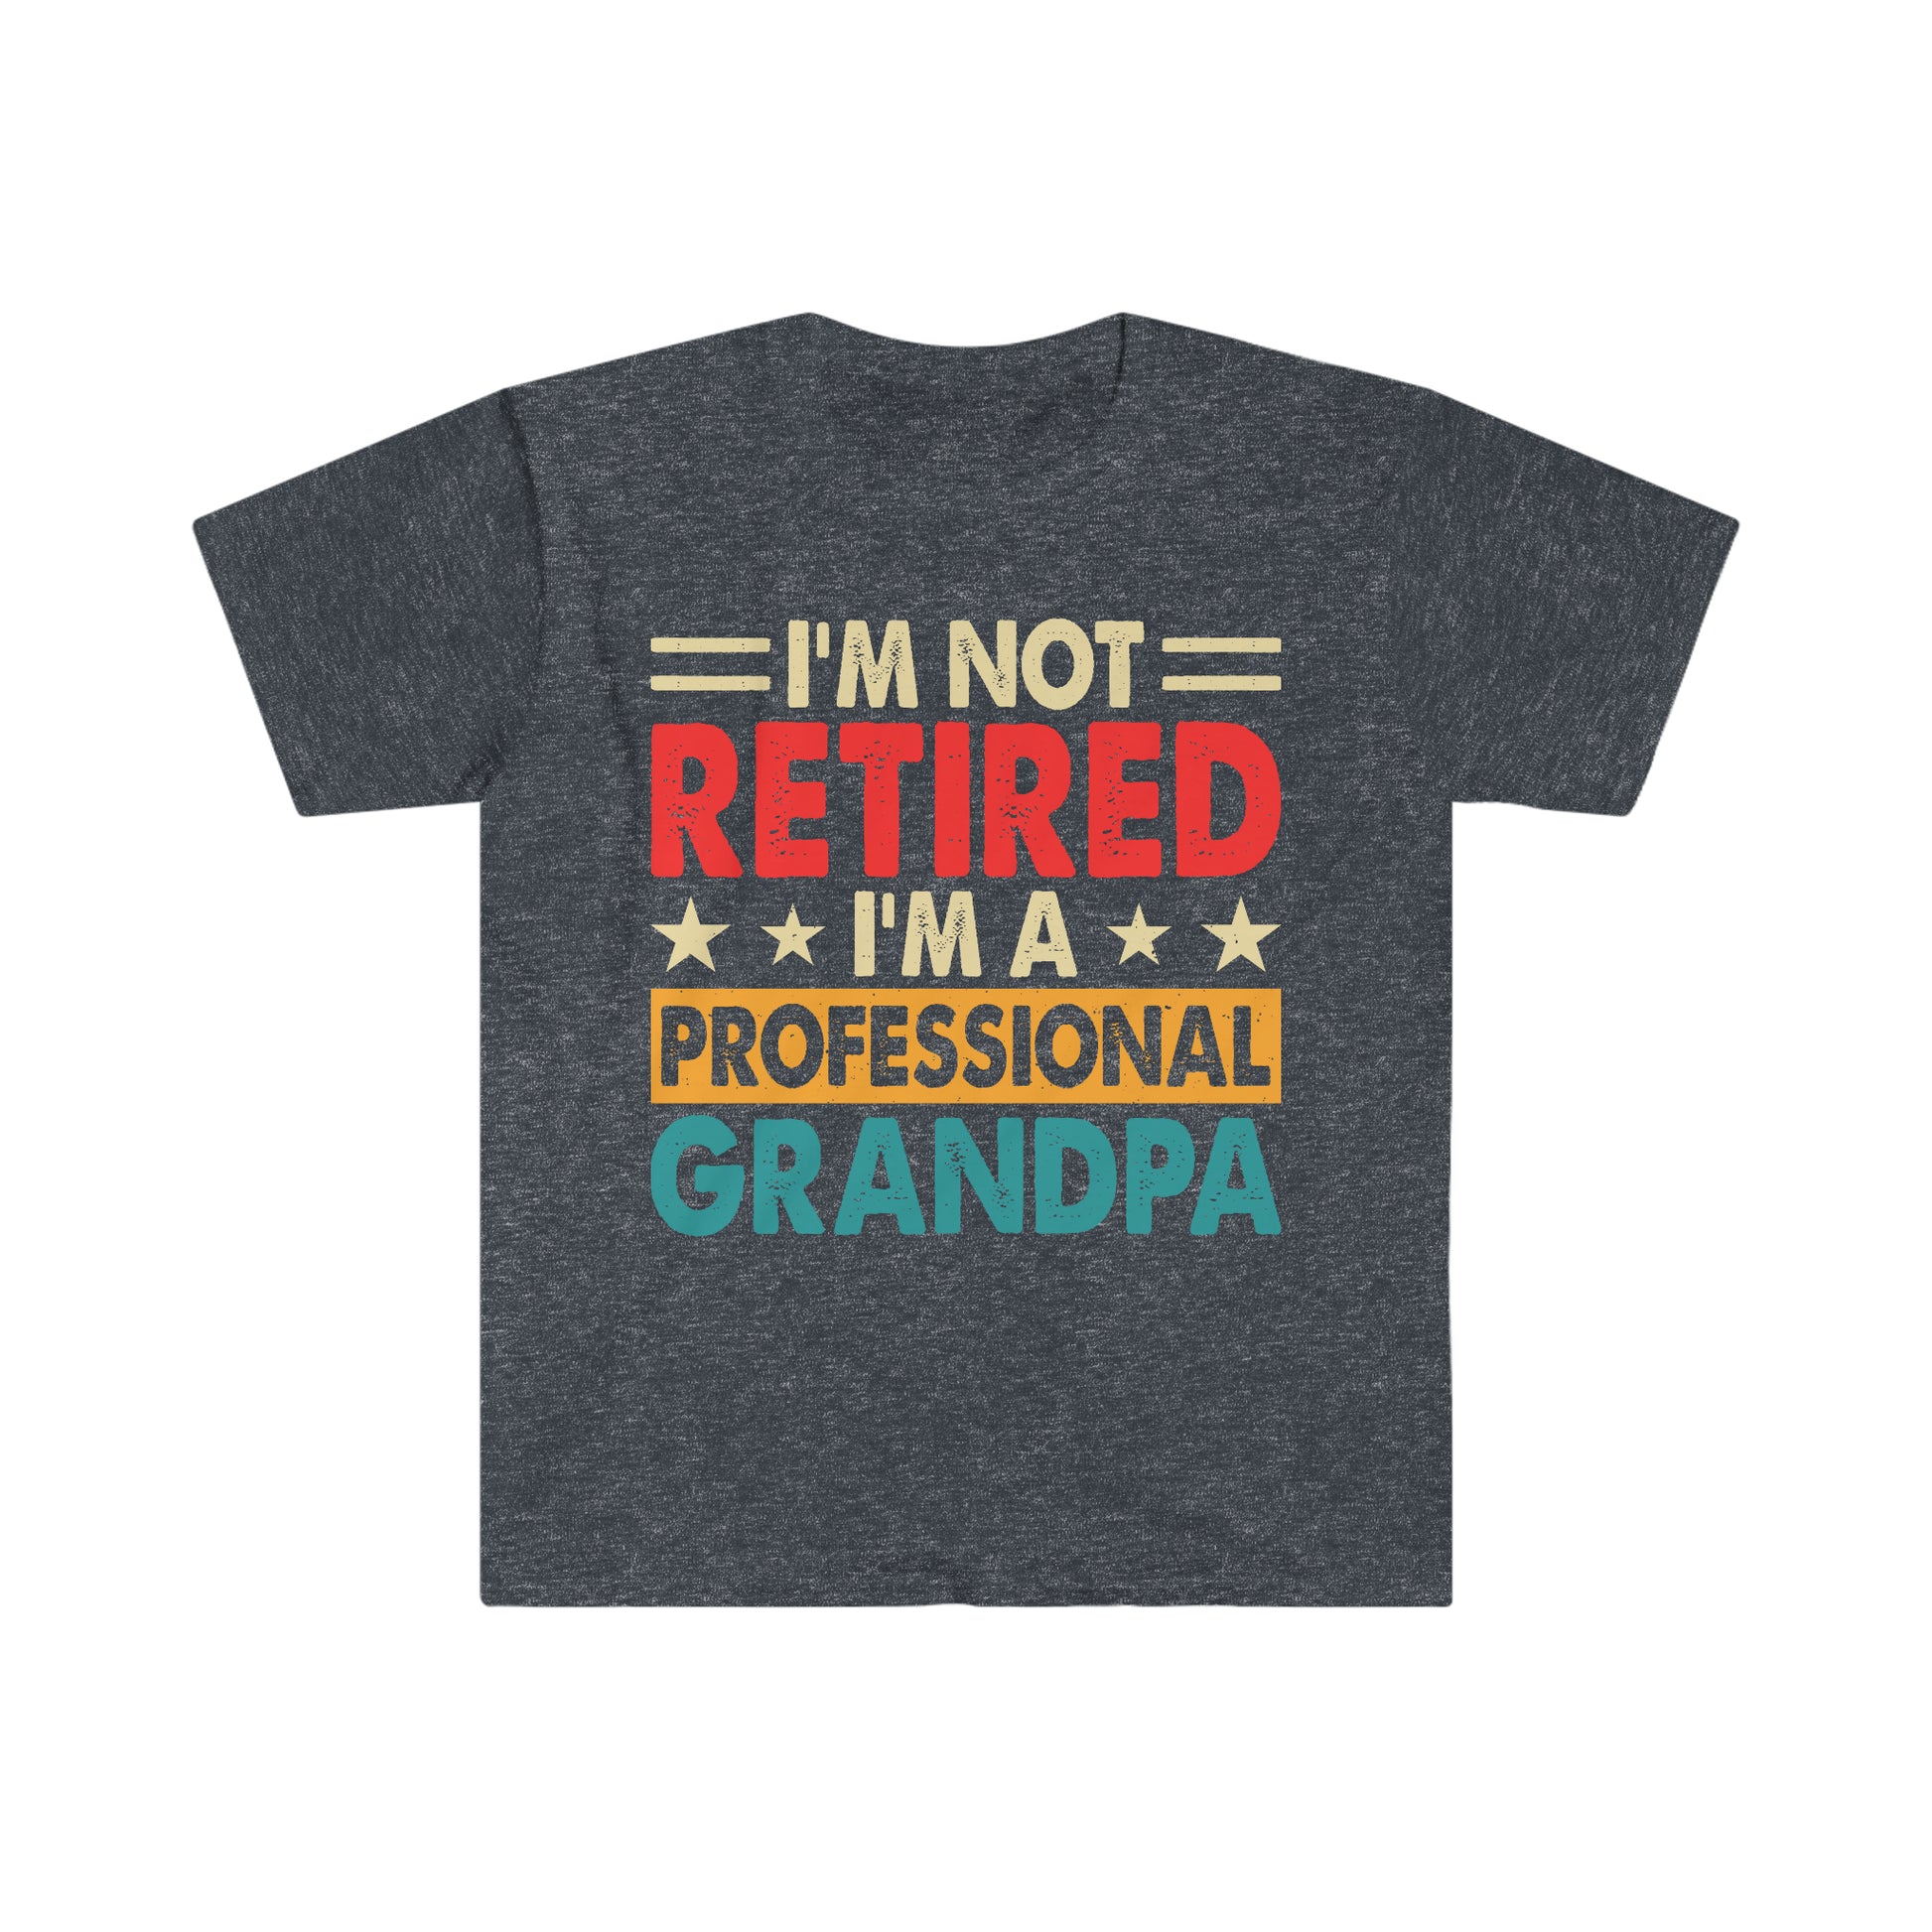 Funny Retirement Shirt for Grandpa